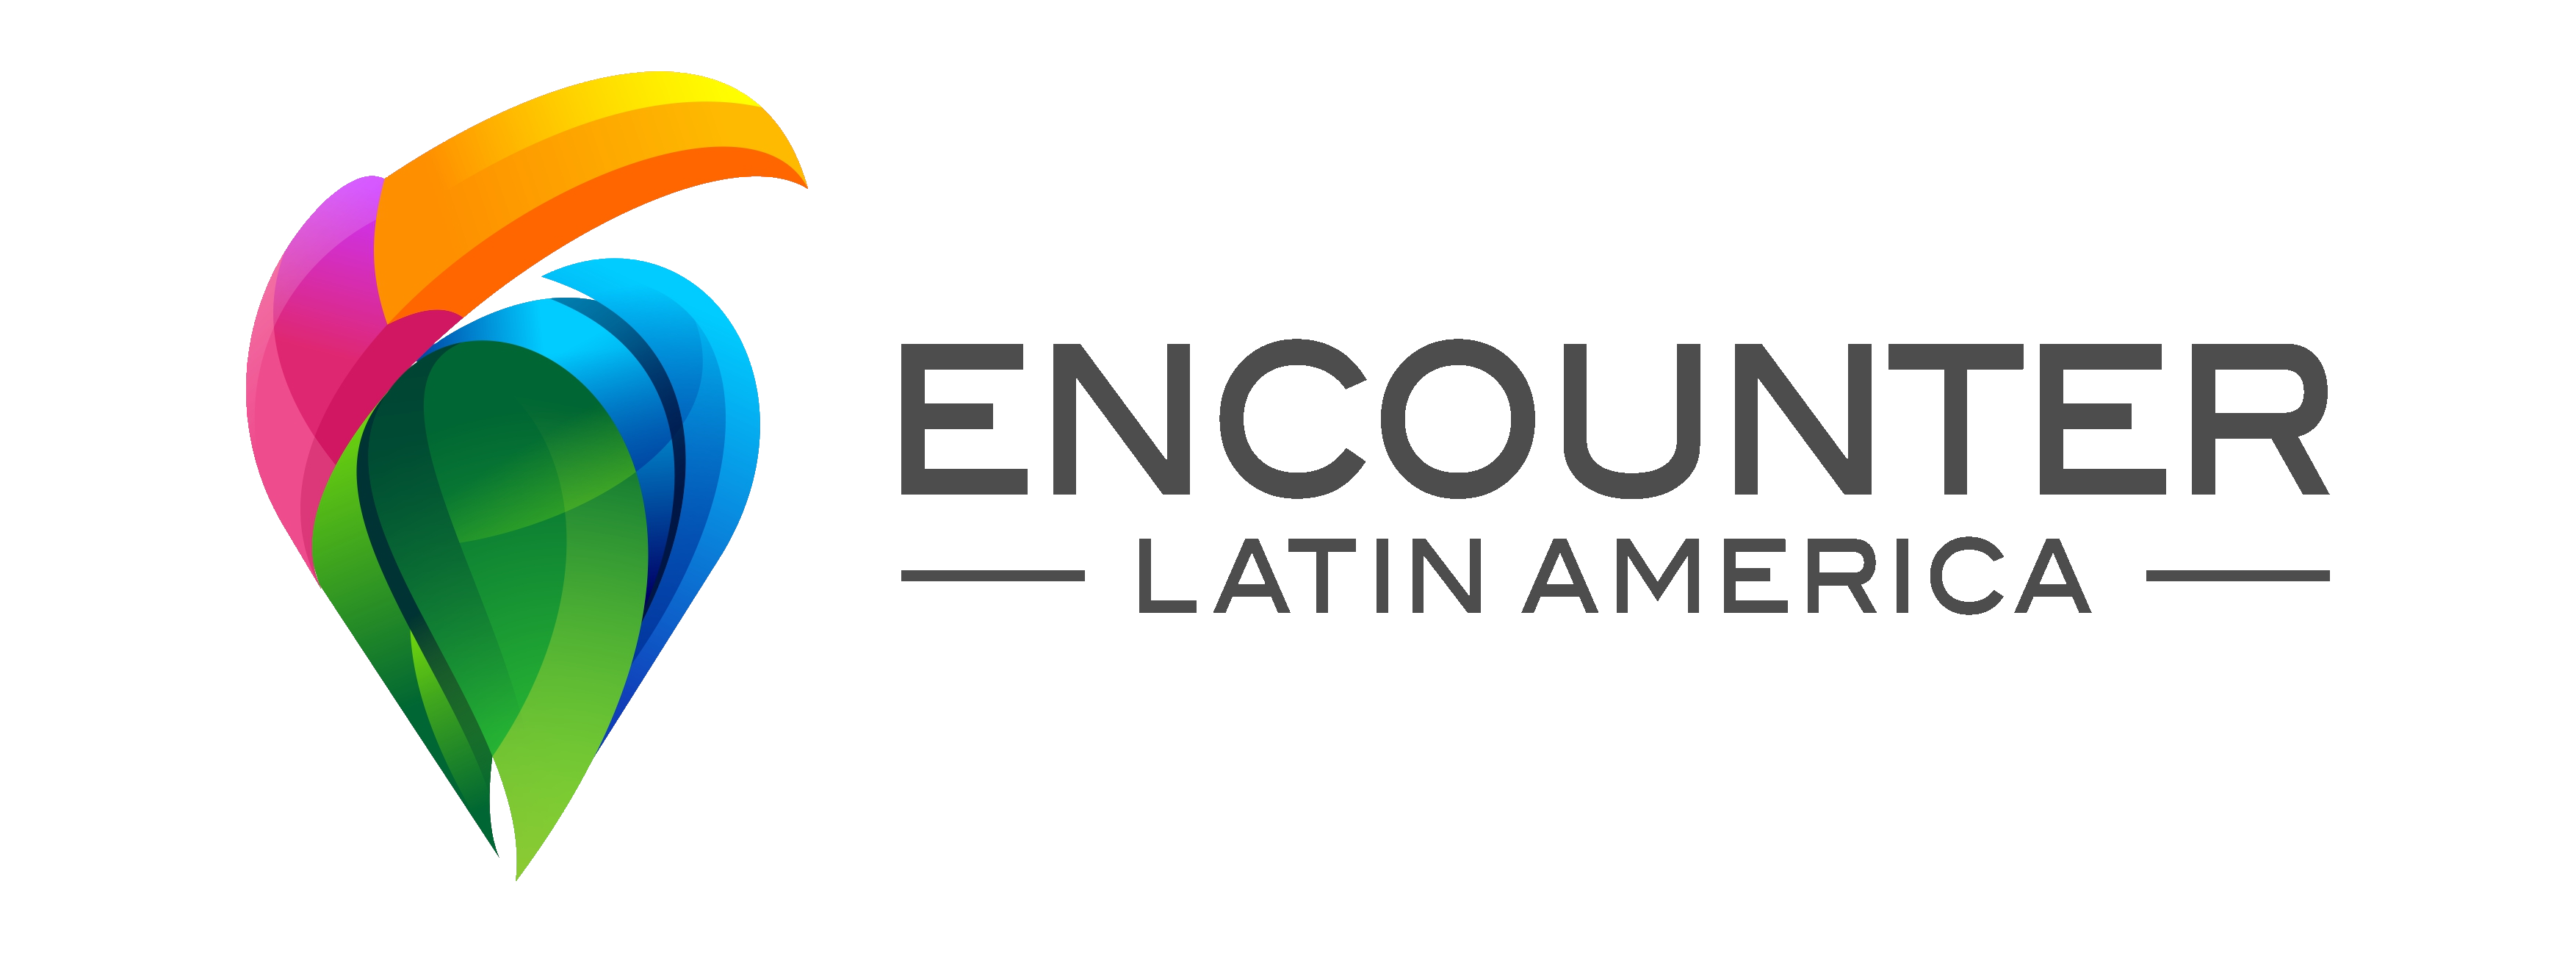 Encounter latin America